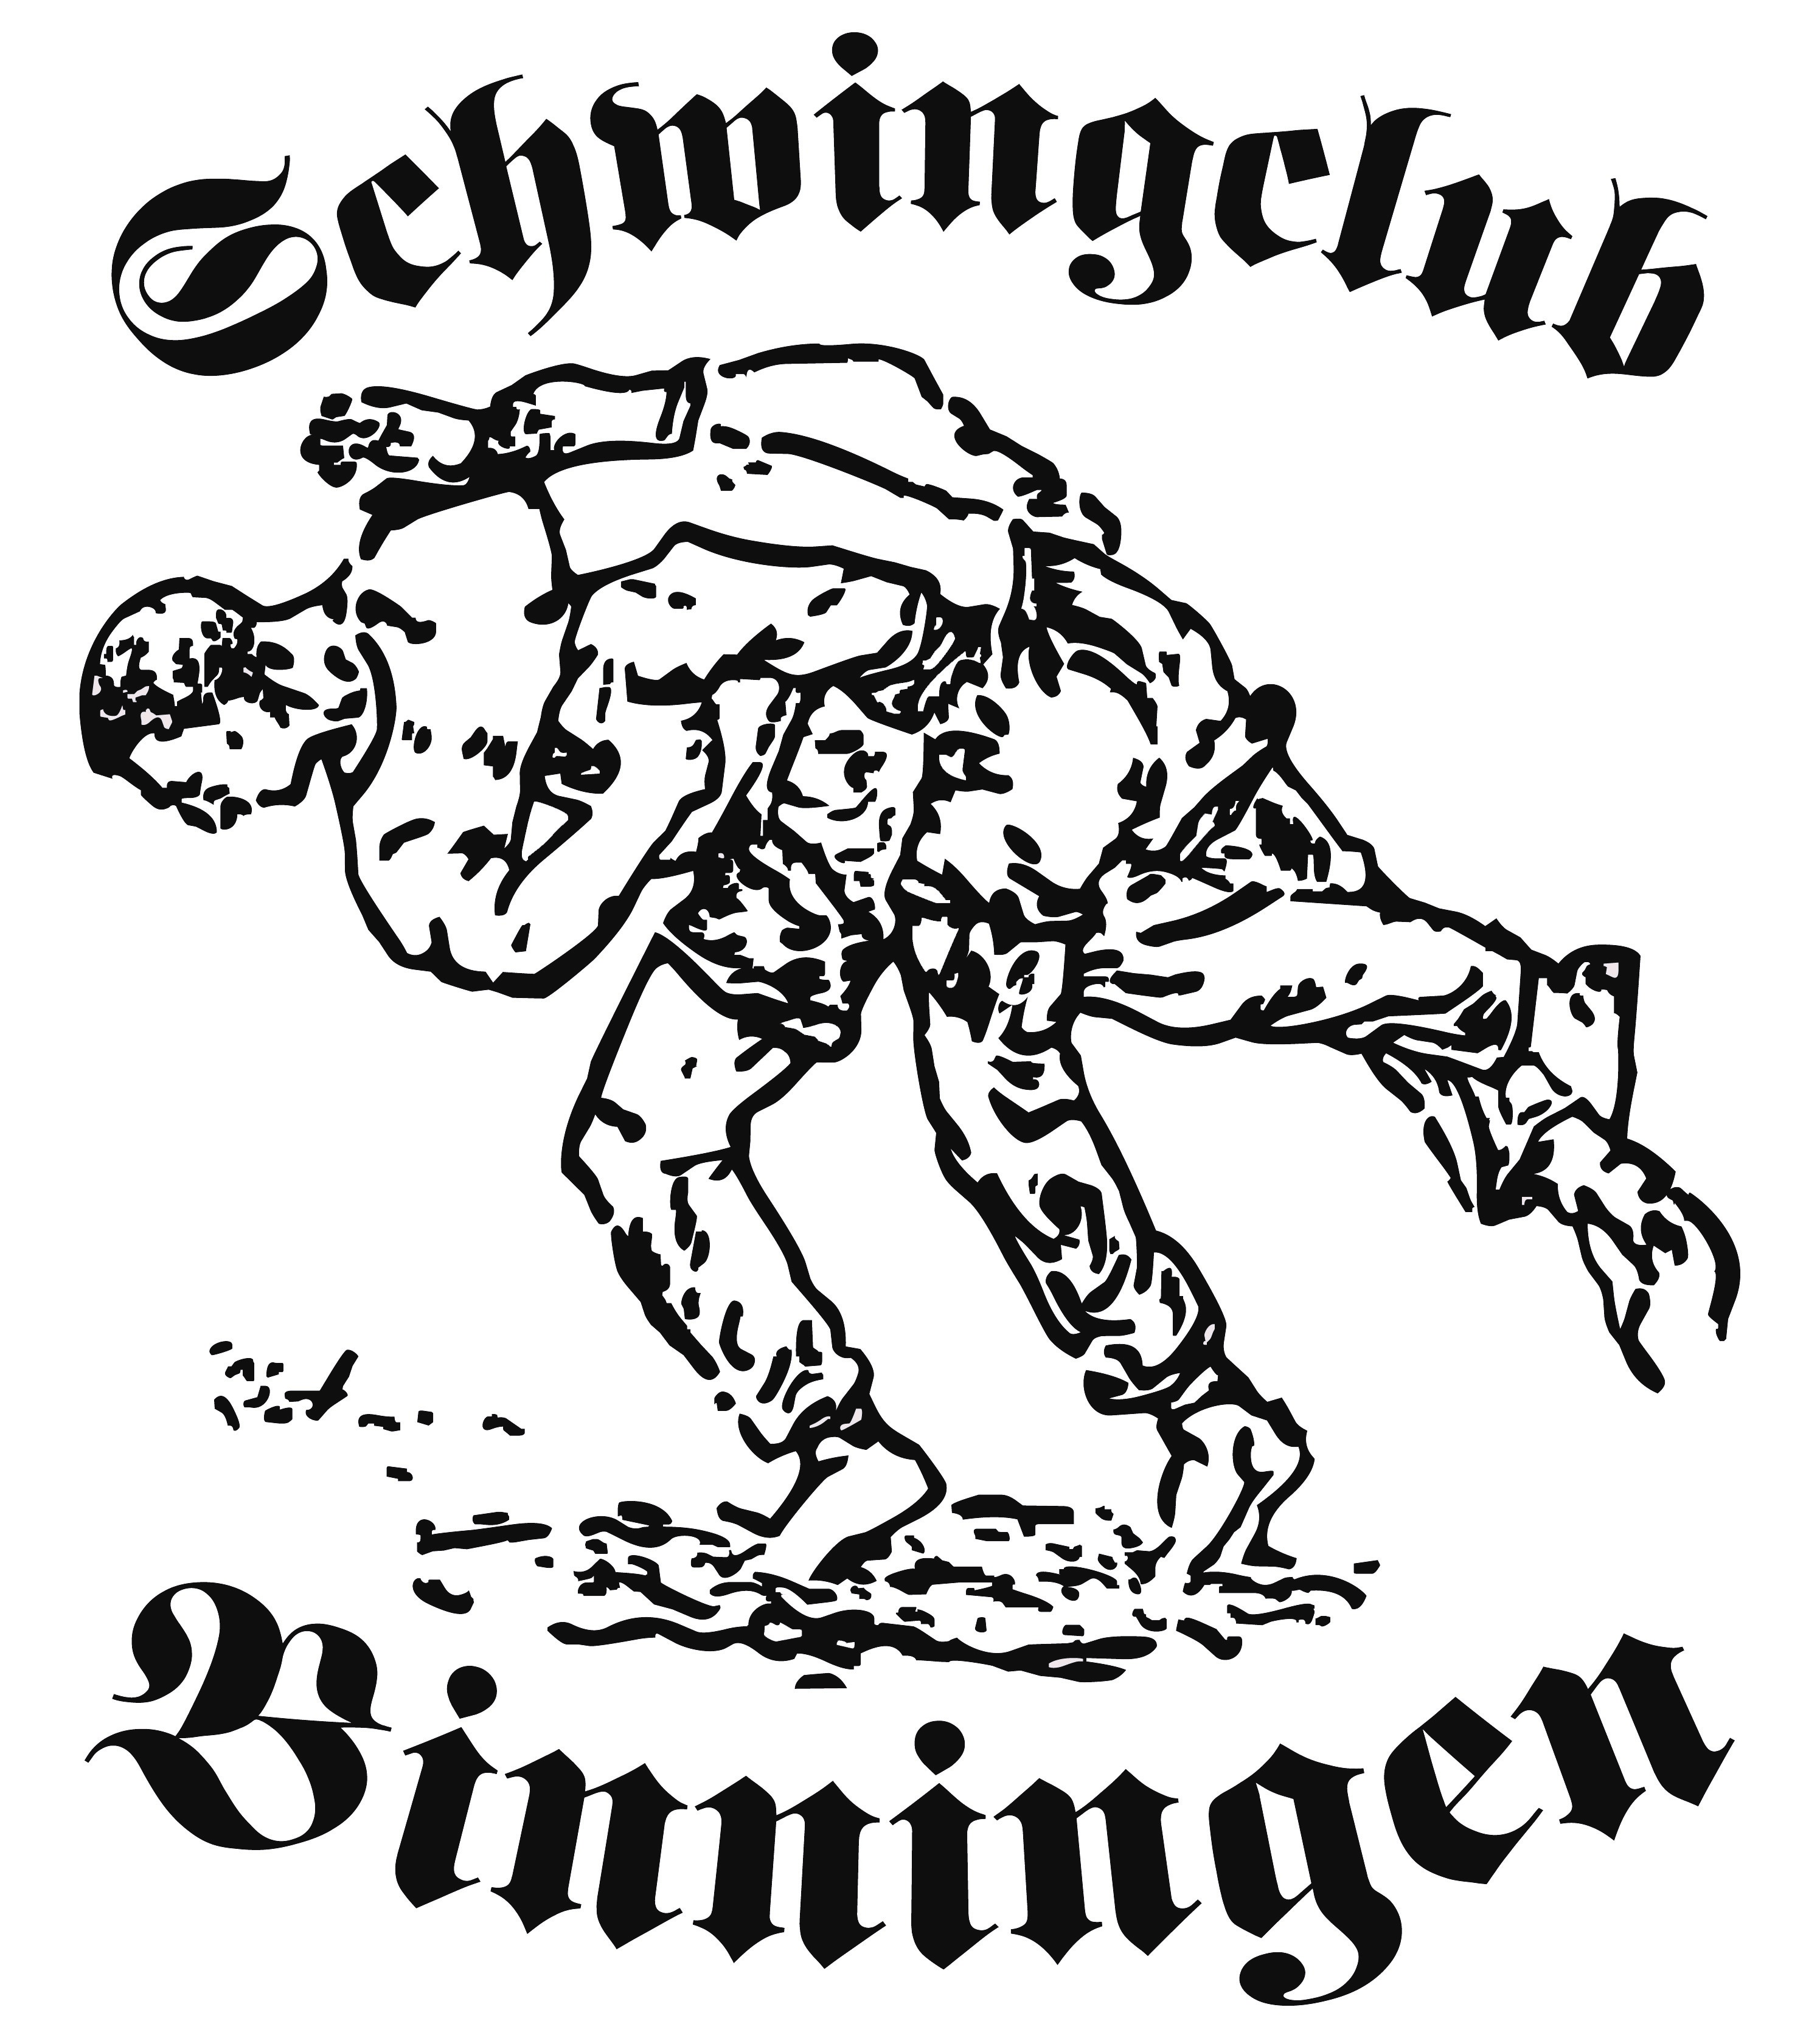 Schwingclub Binningen